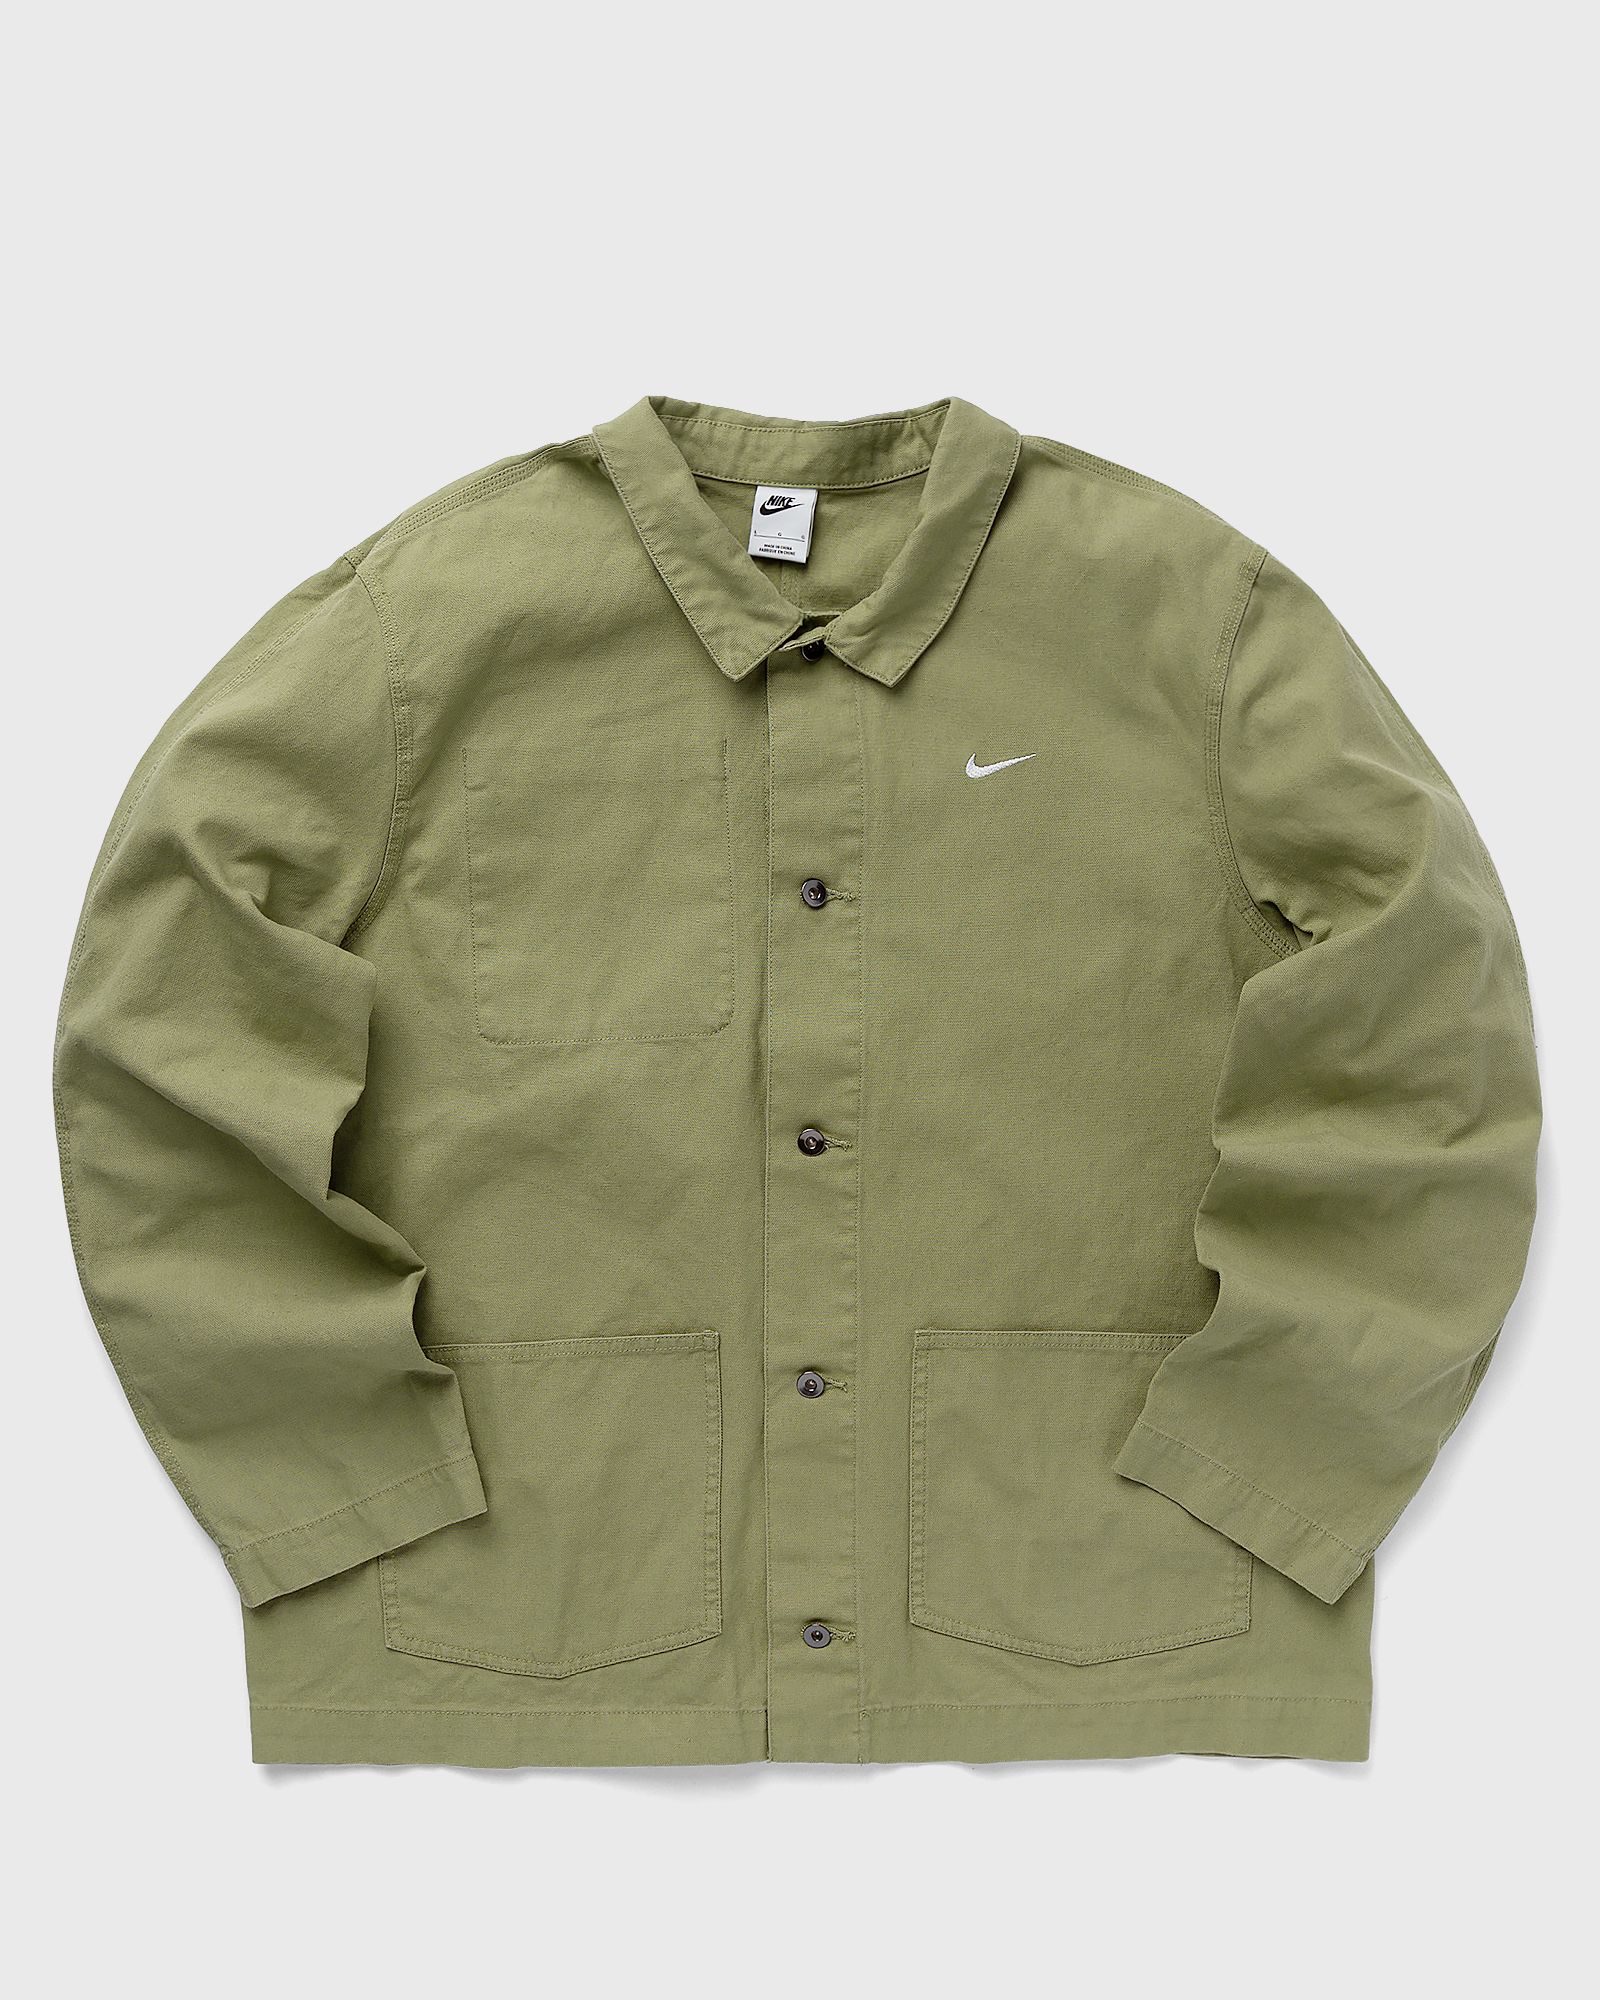 Nike - life unlined chore coat men overshirts green in größe:xl